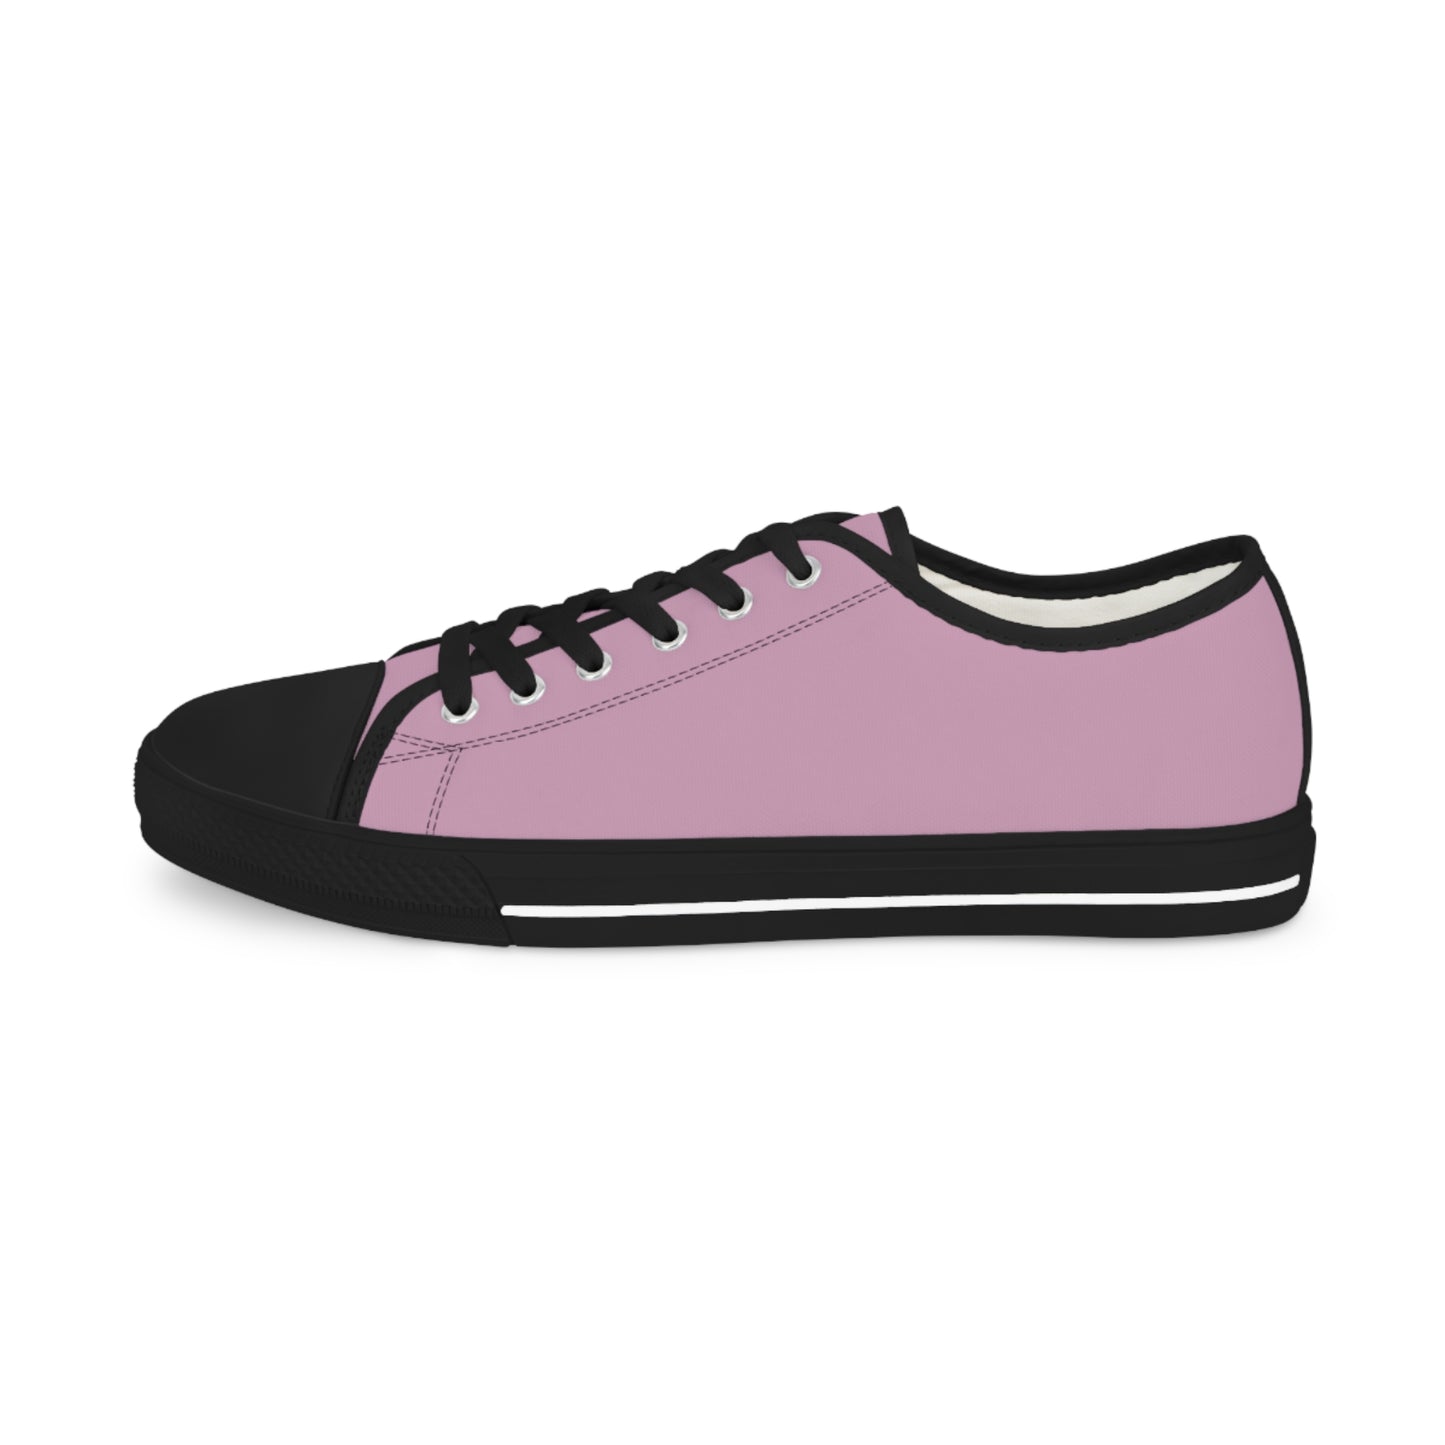 Men's Canvas Low Top Solid Color Sneakers - Faded Bubblegum US 14 Black sole